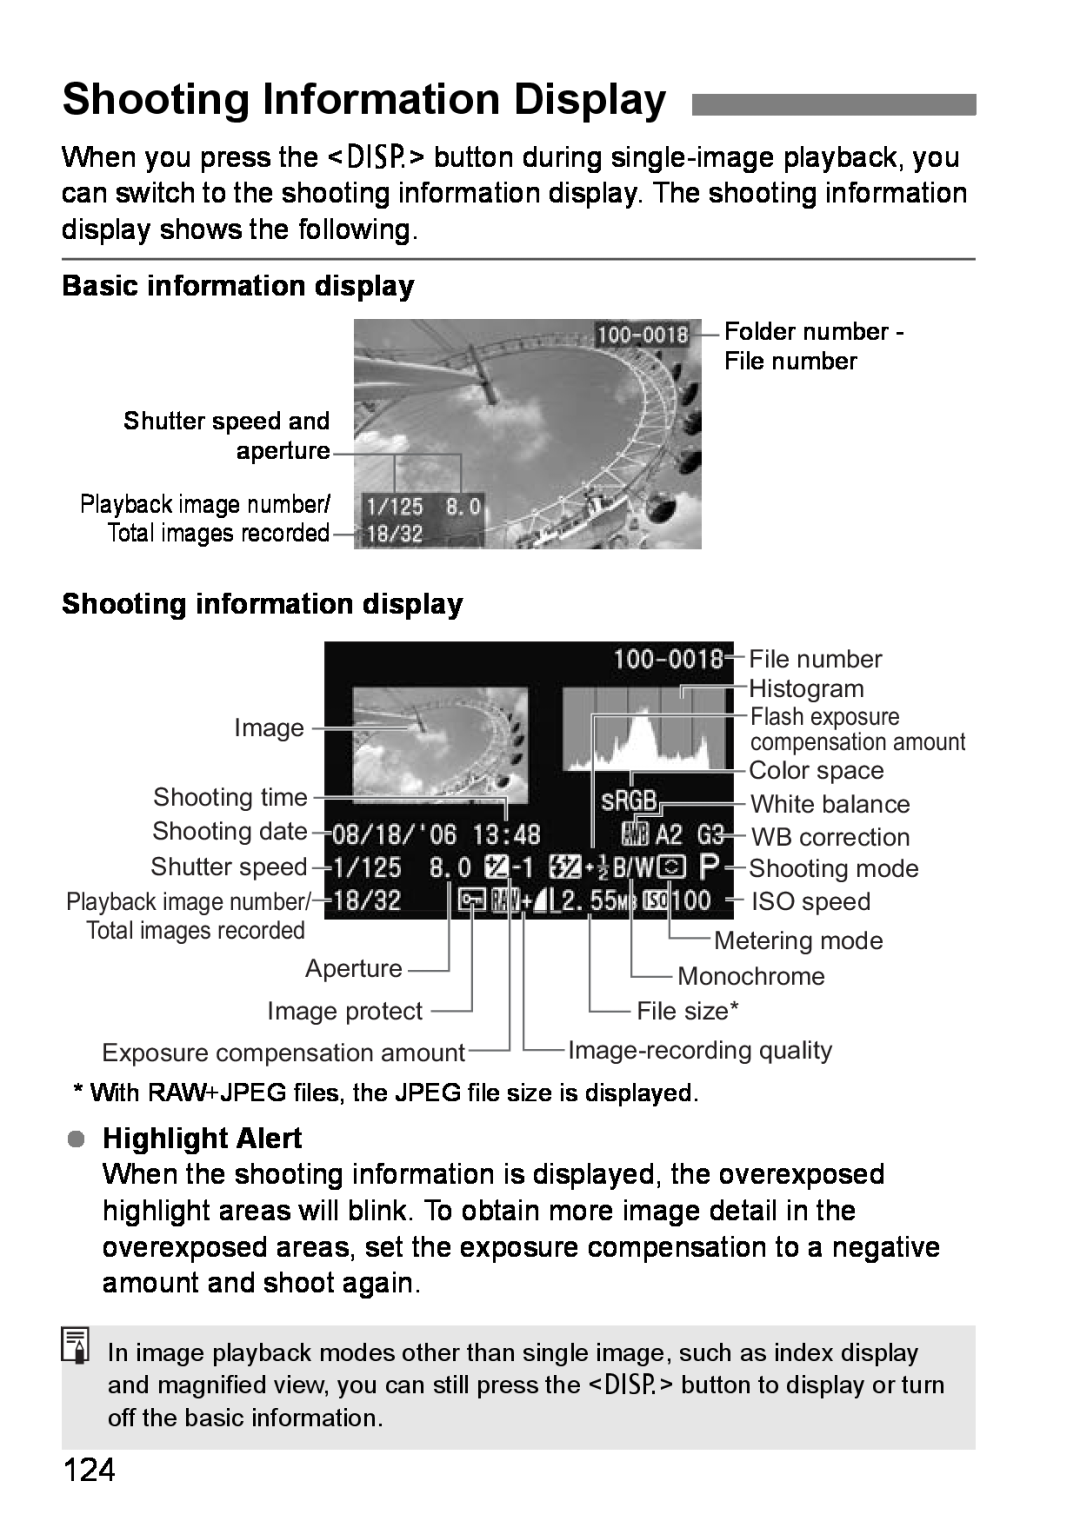 Canon EOS DIGITAL REBEL XTI Shooting Information Display, Basic information display, Shooting information display 